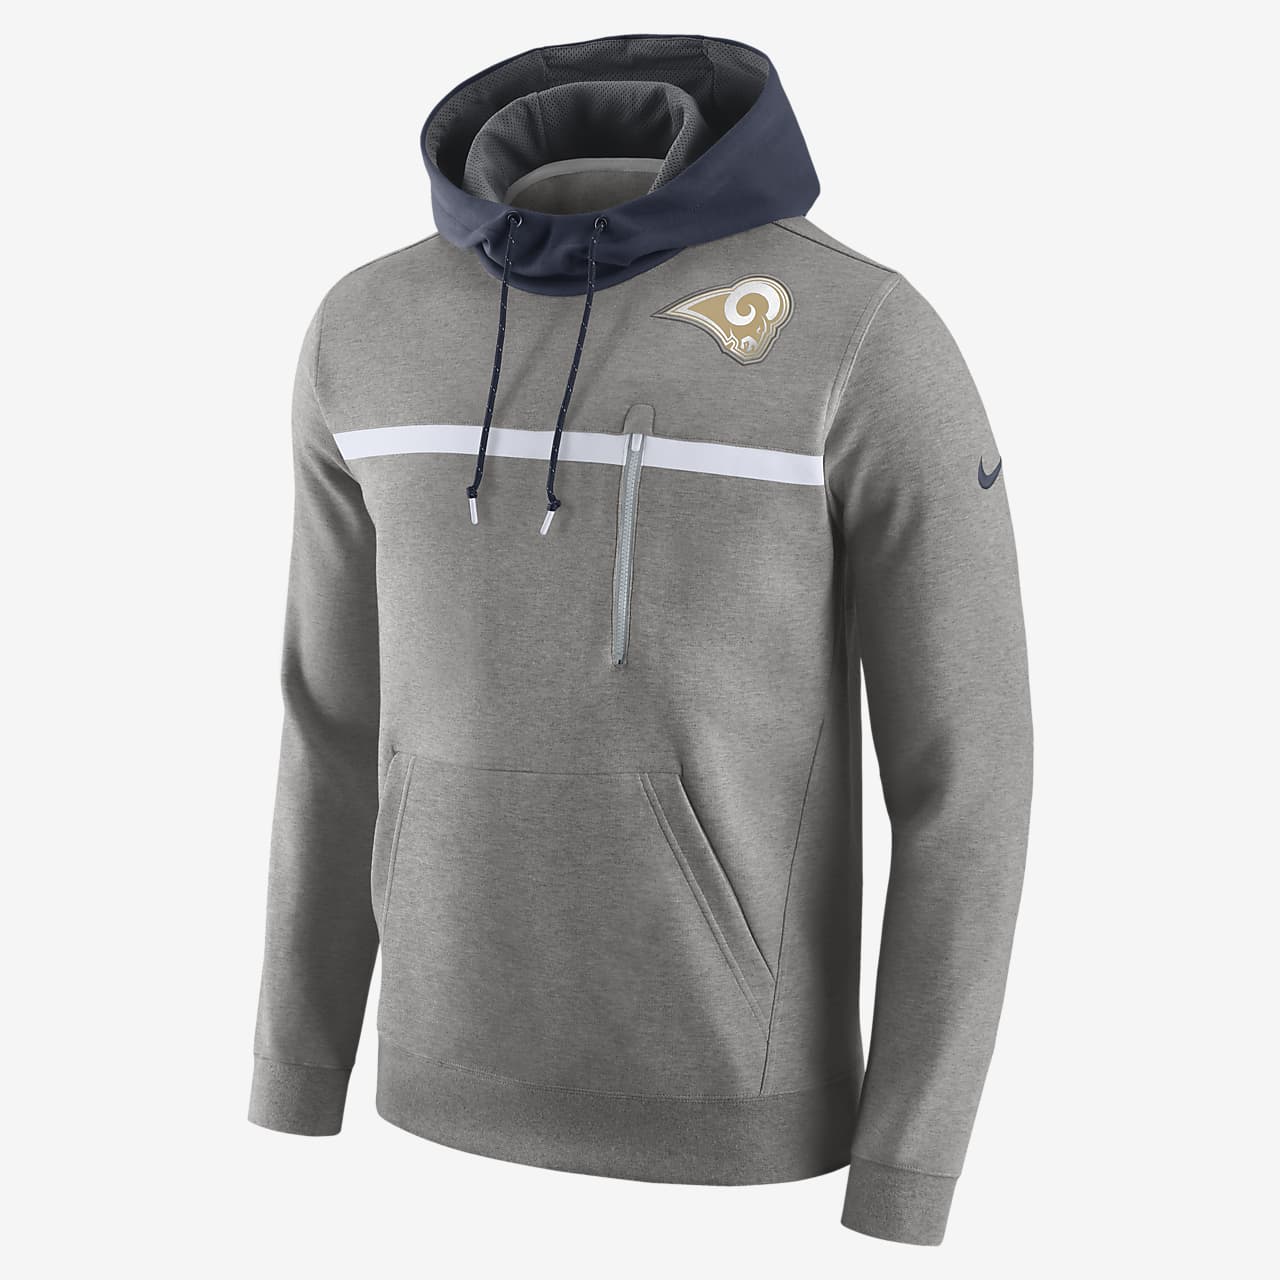 Nike Championship Drive Sweatshirt (NFL Rams) Men's Hoodie